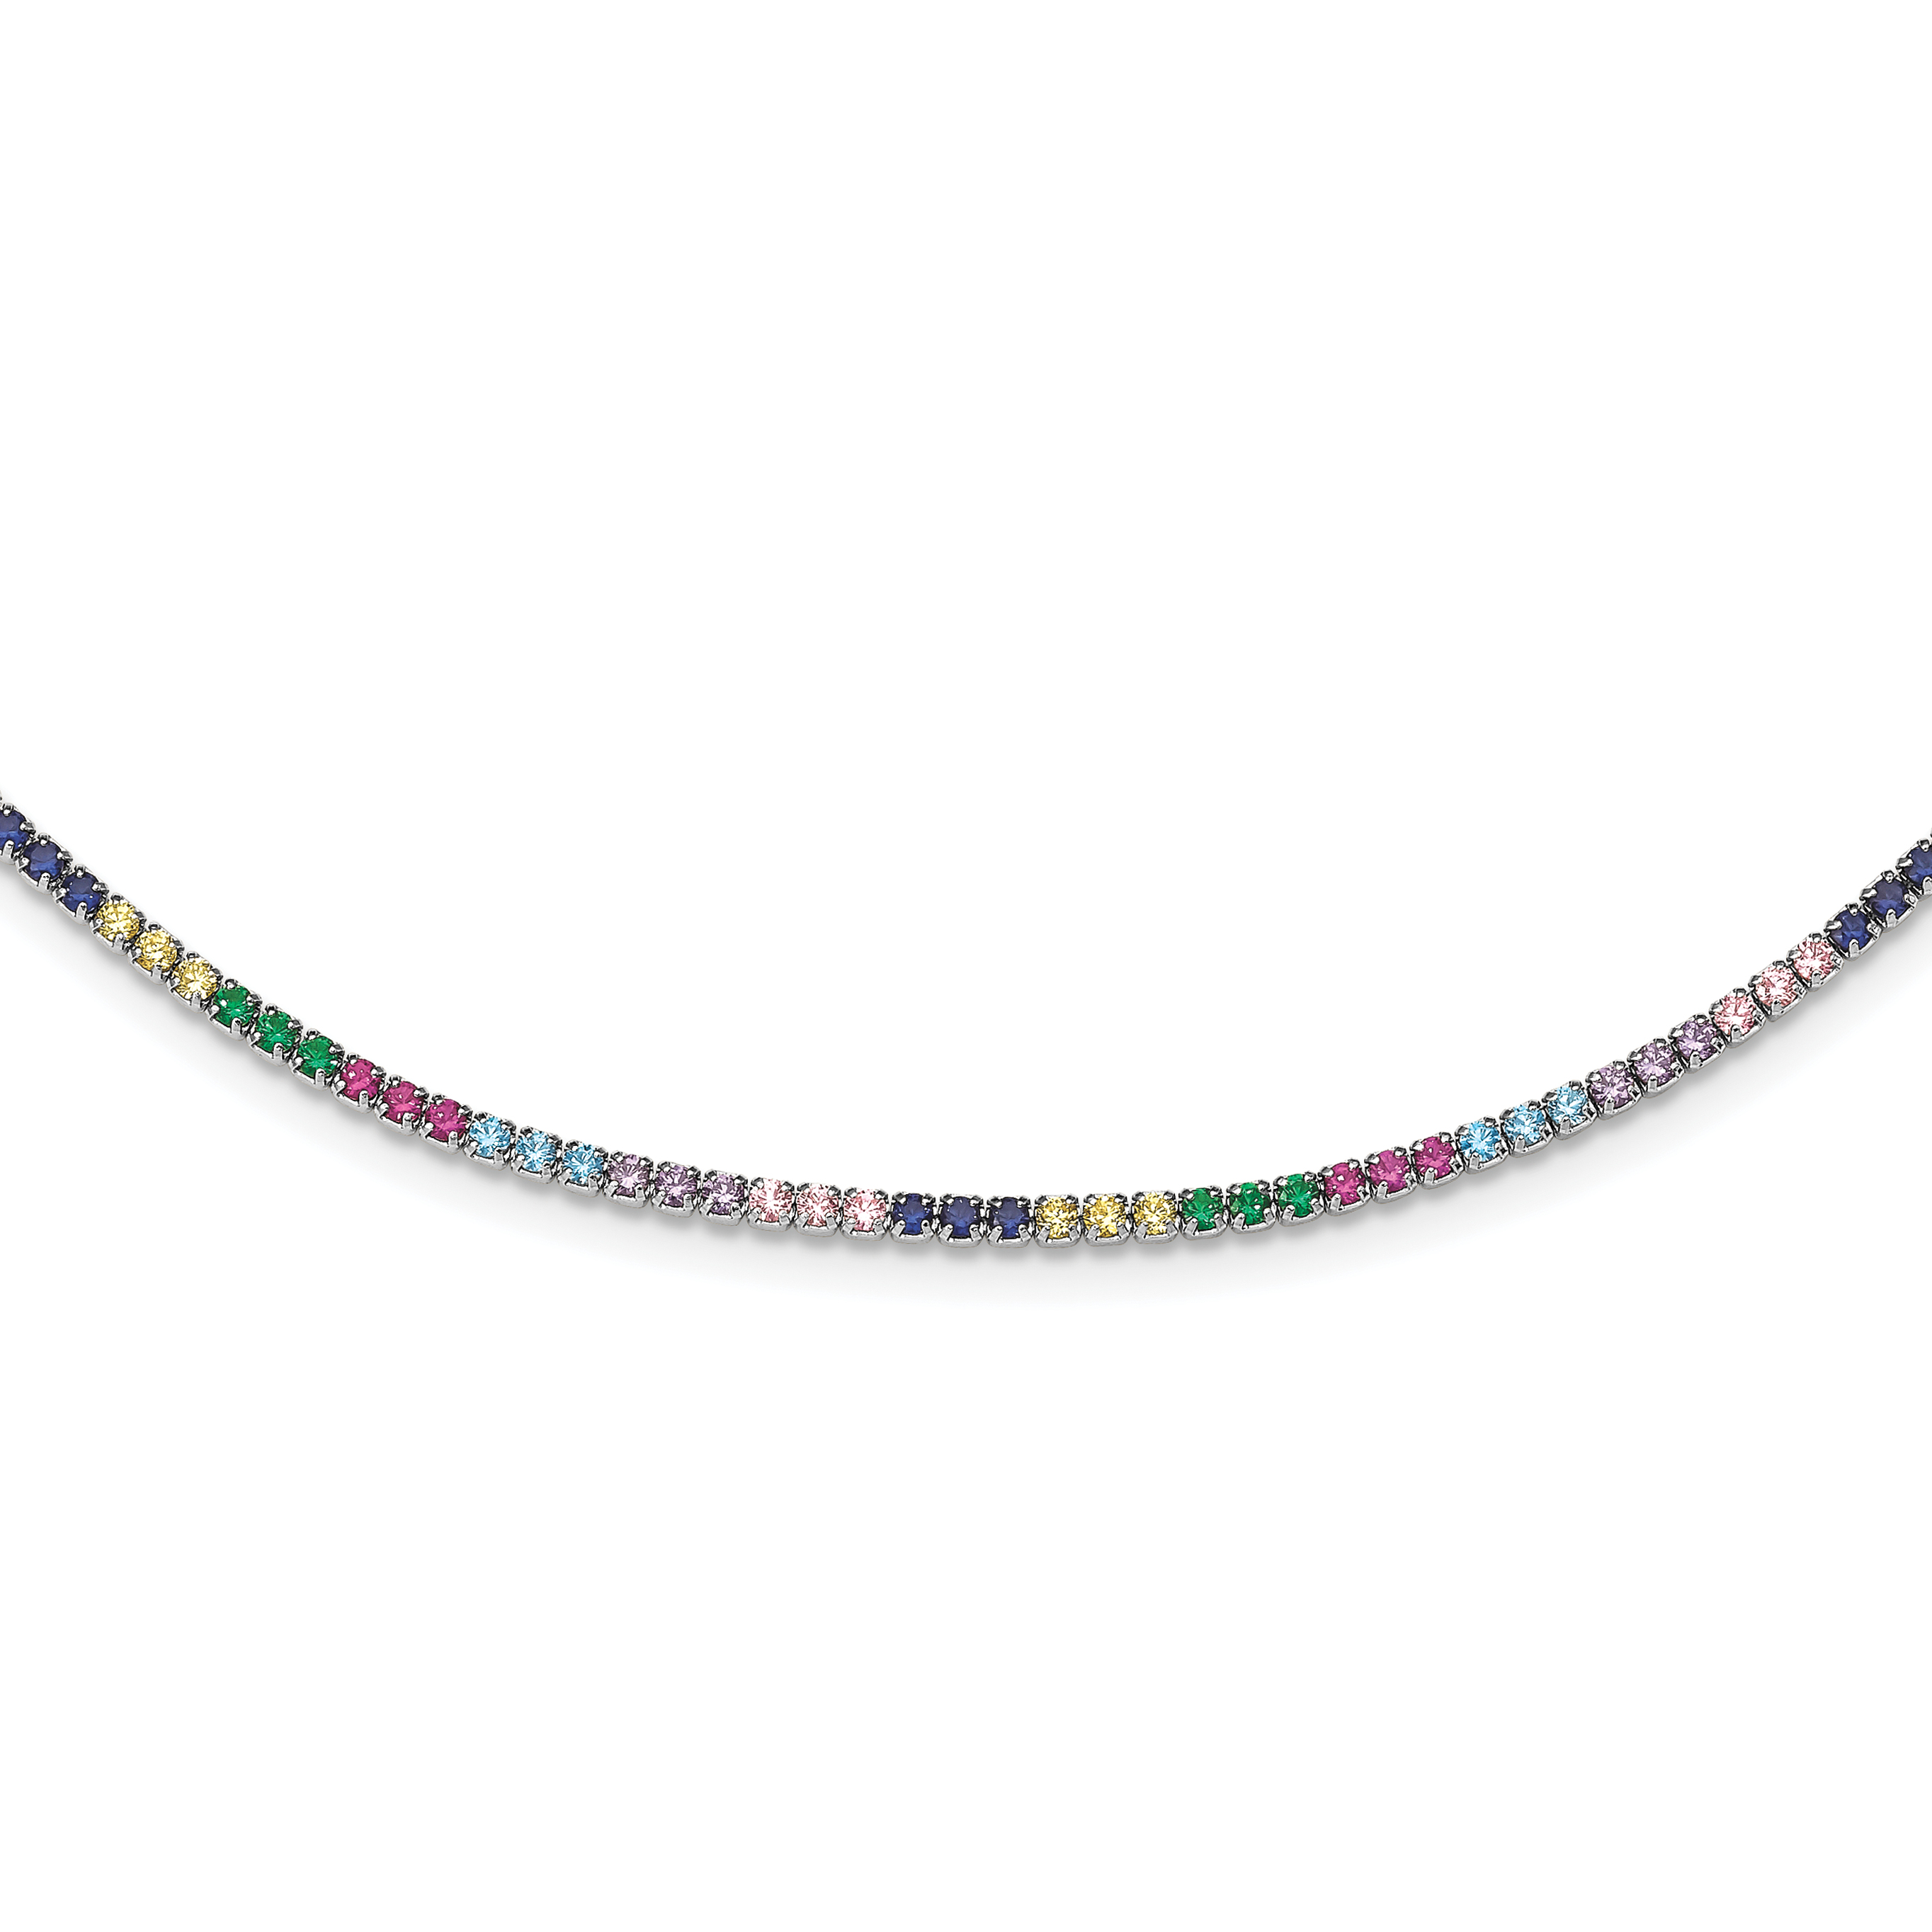 Monet Jewelry Silver Tone 12 Inch Choker Necklace | Hamilton Place